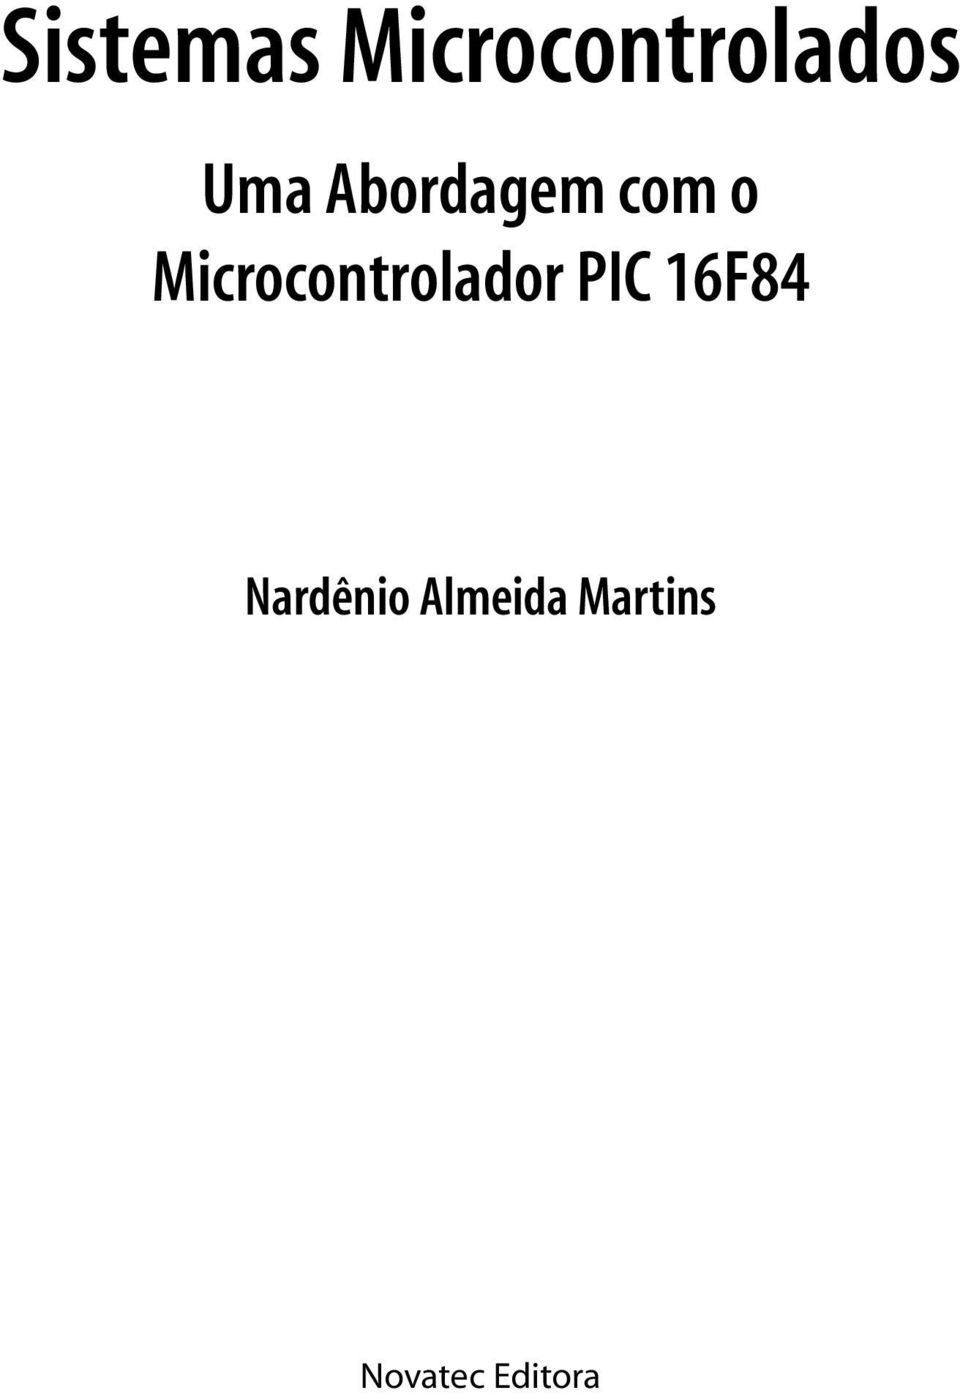 Microcontrolador PIC 16F84